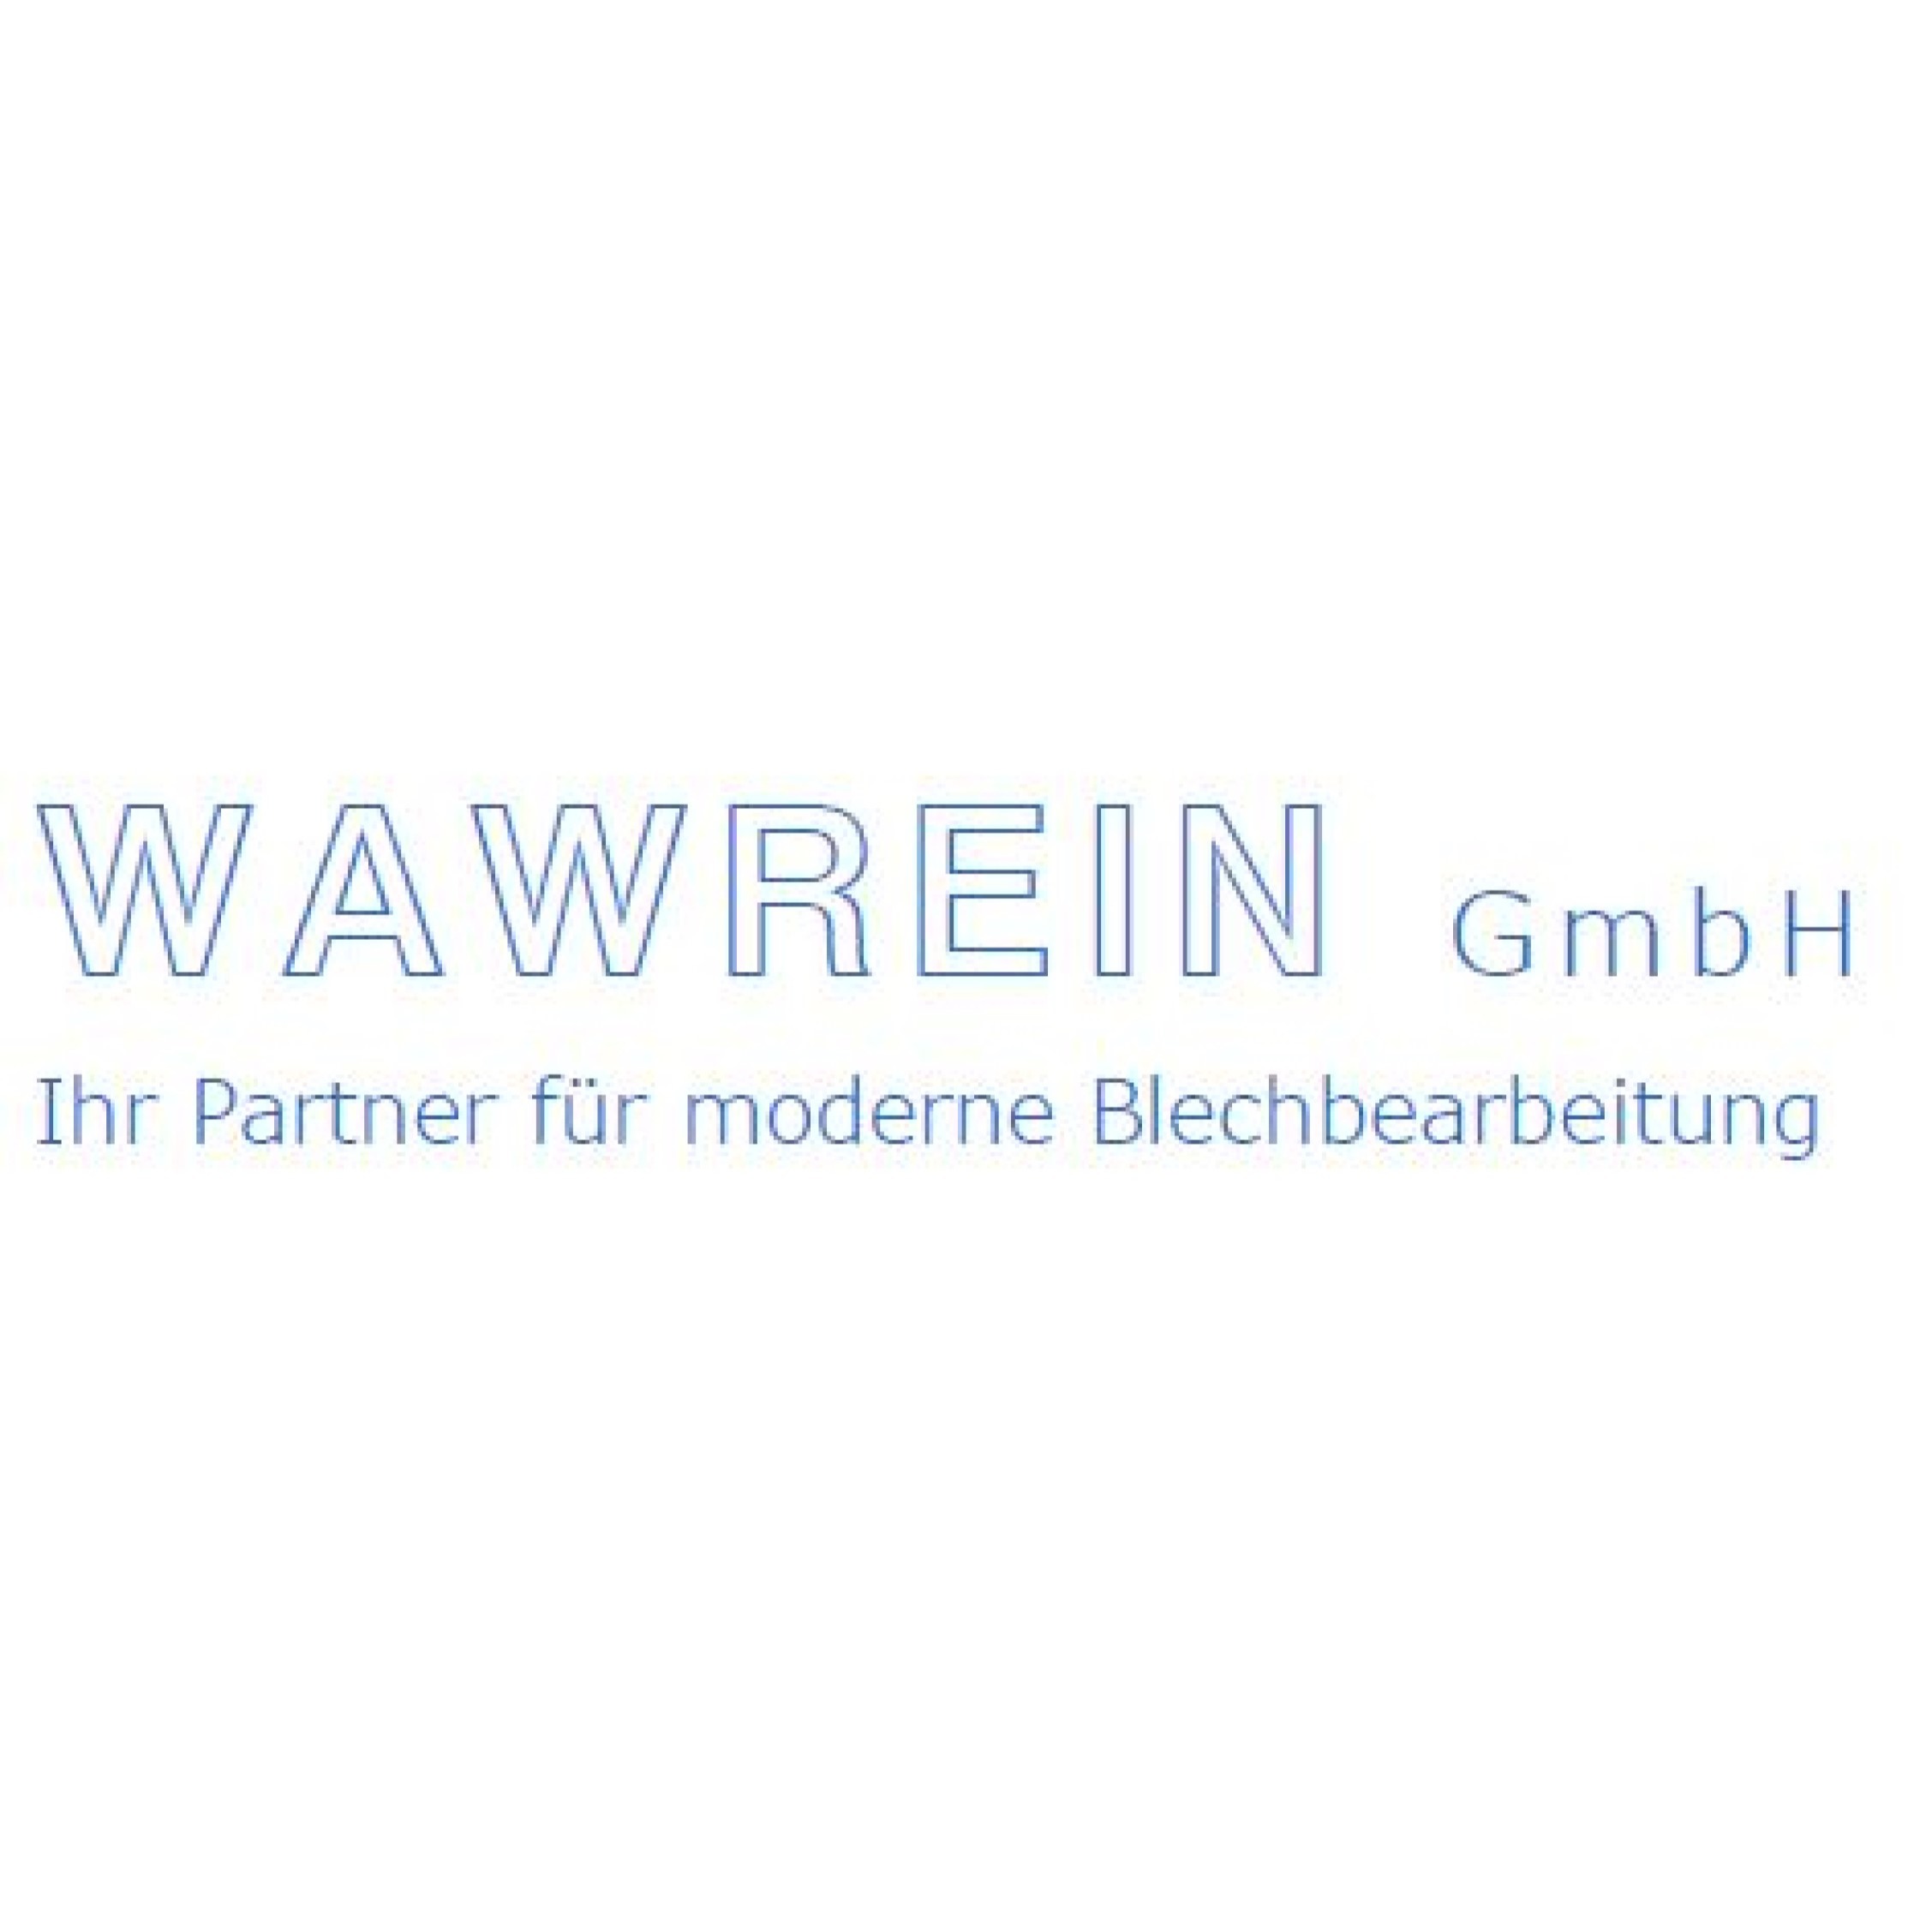 WAWREIN GmbH